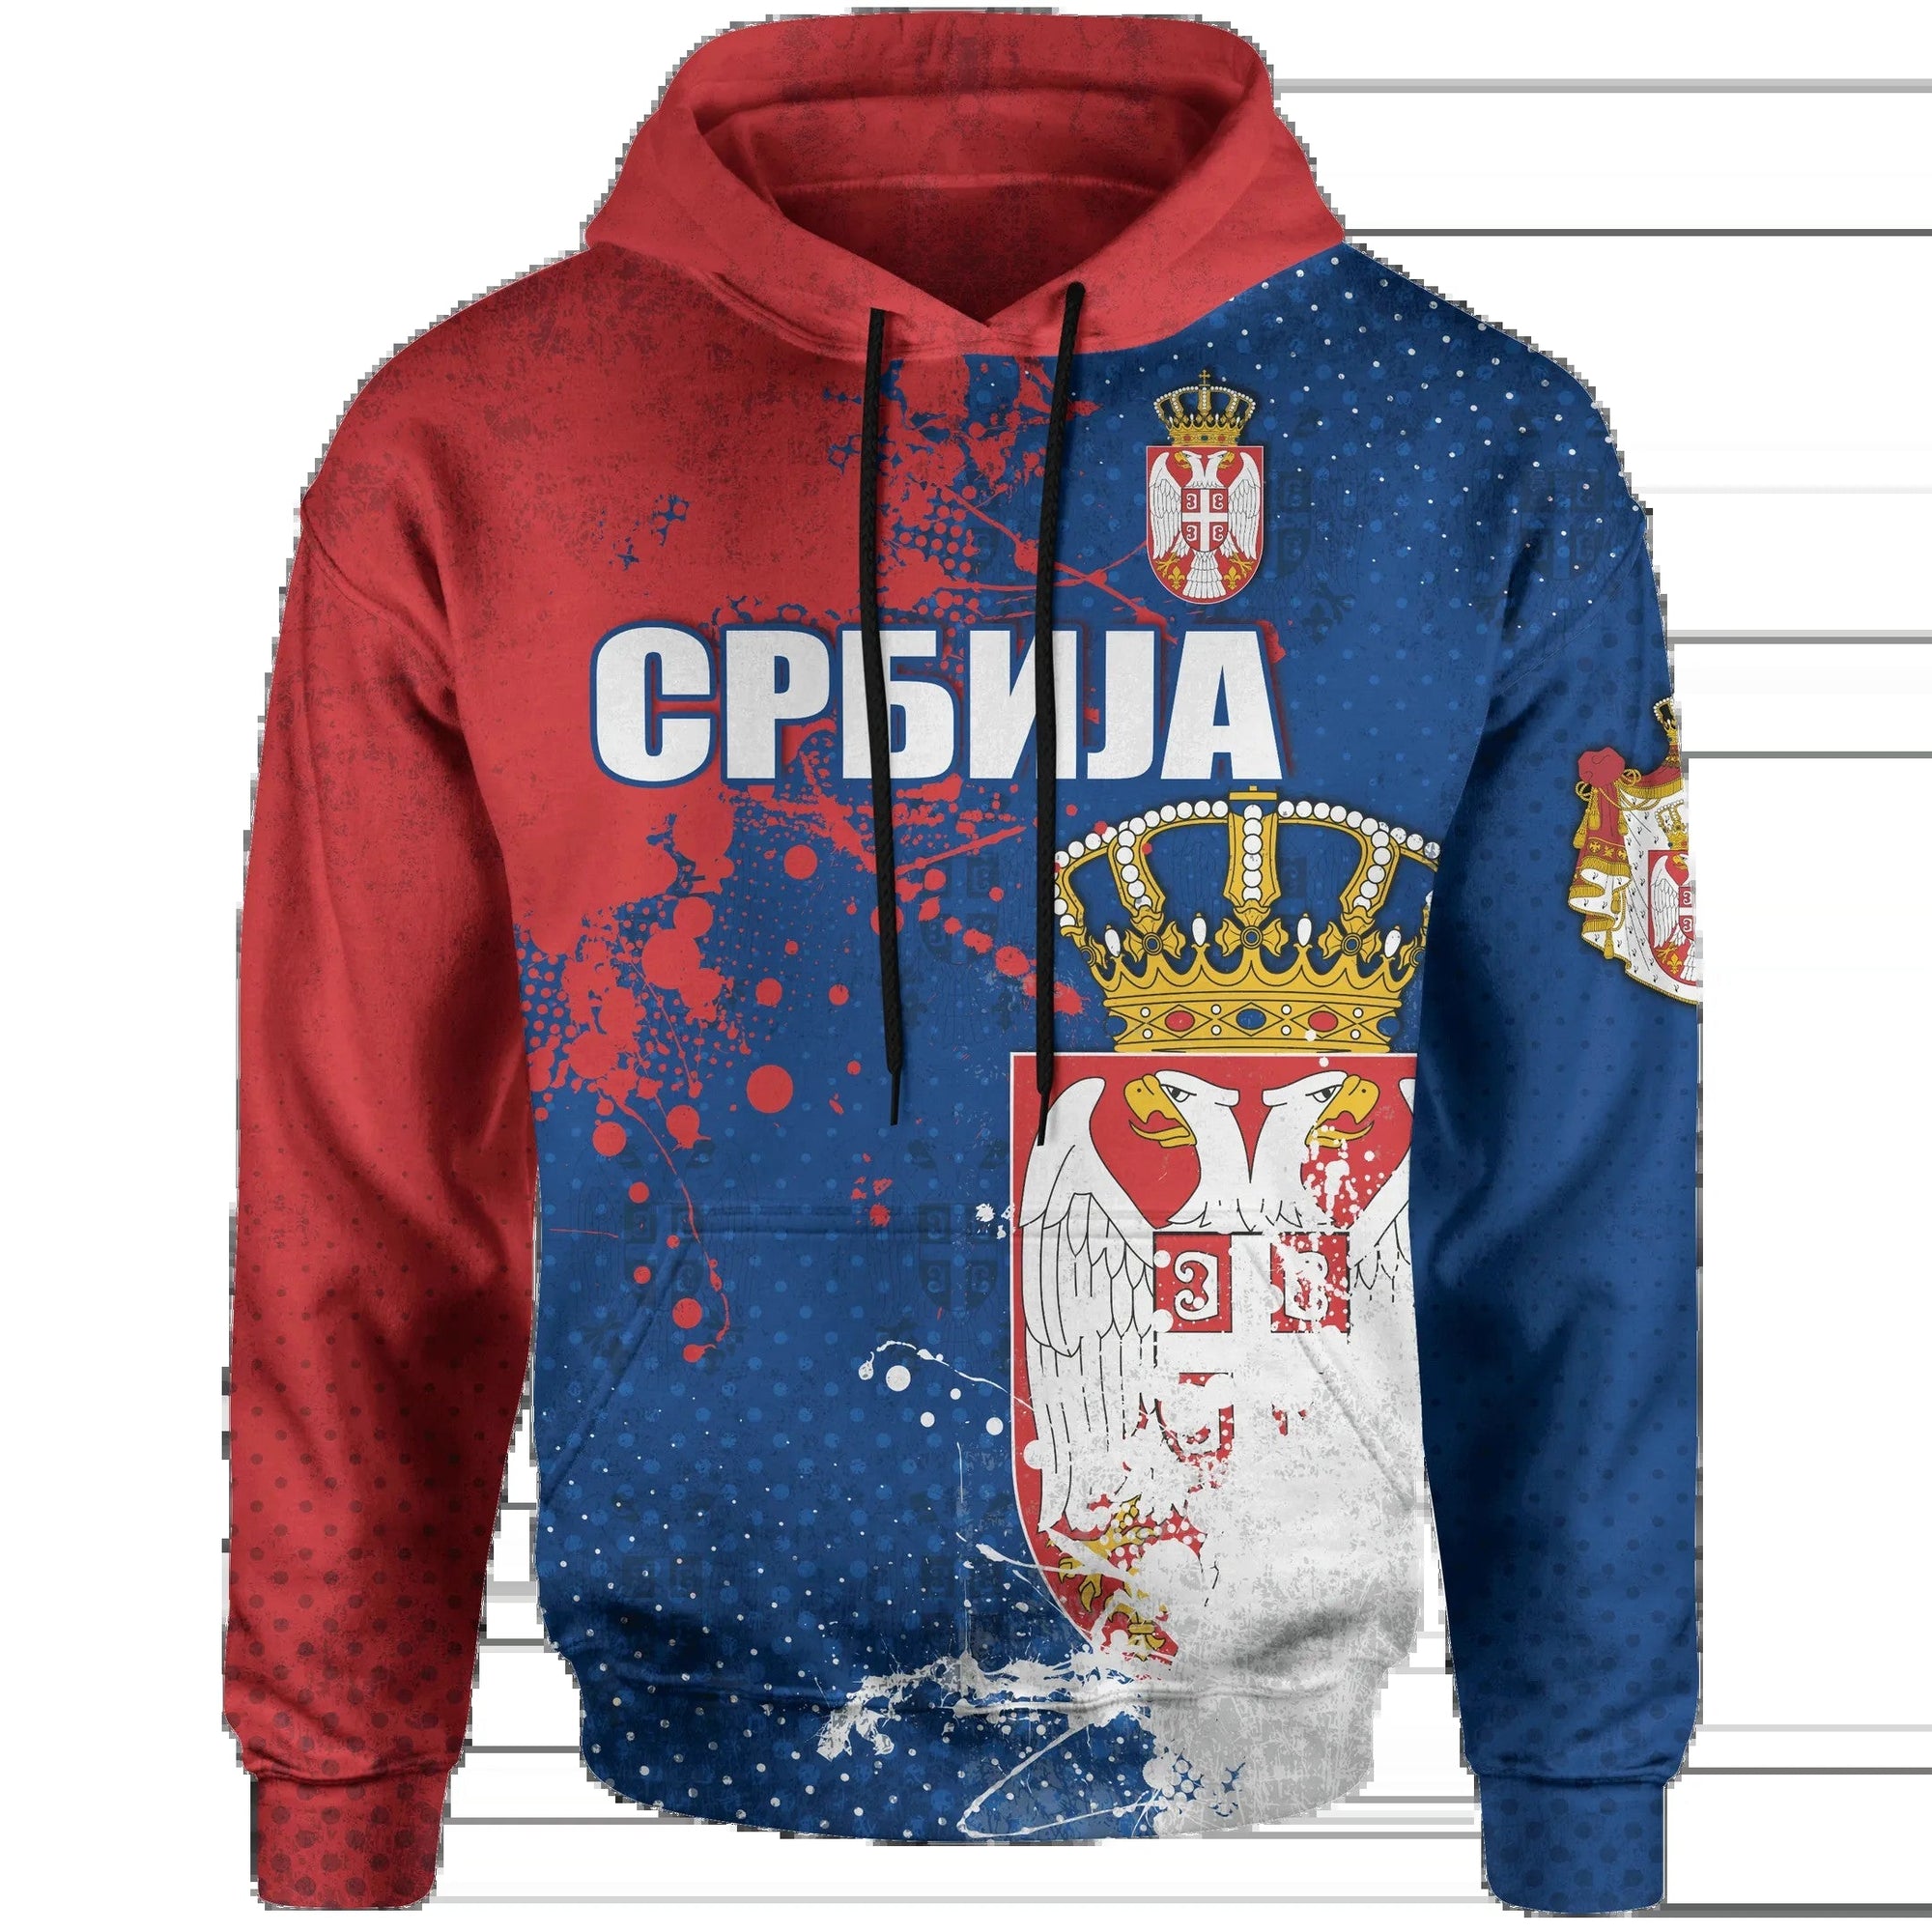 serbia-hoodie-the-great-serbia-serbian-language